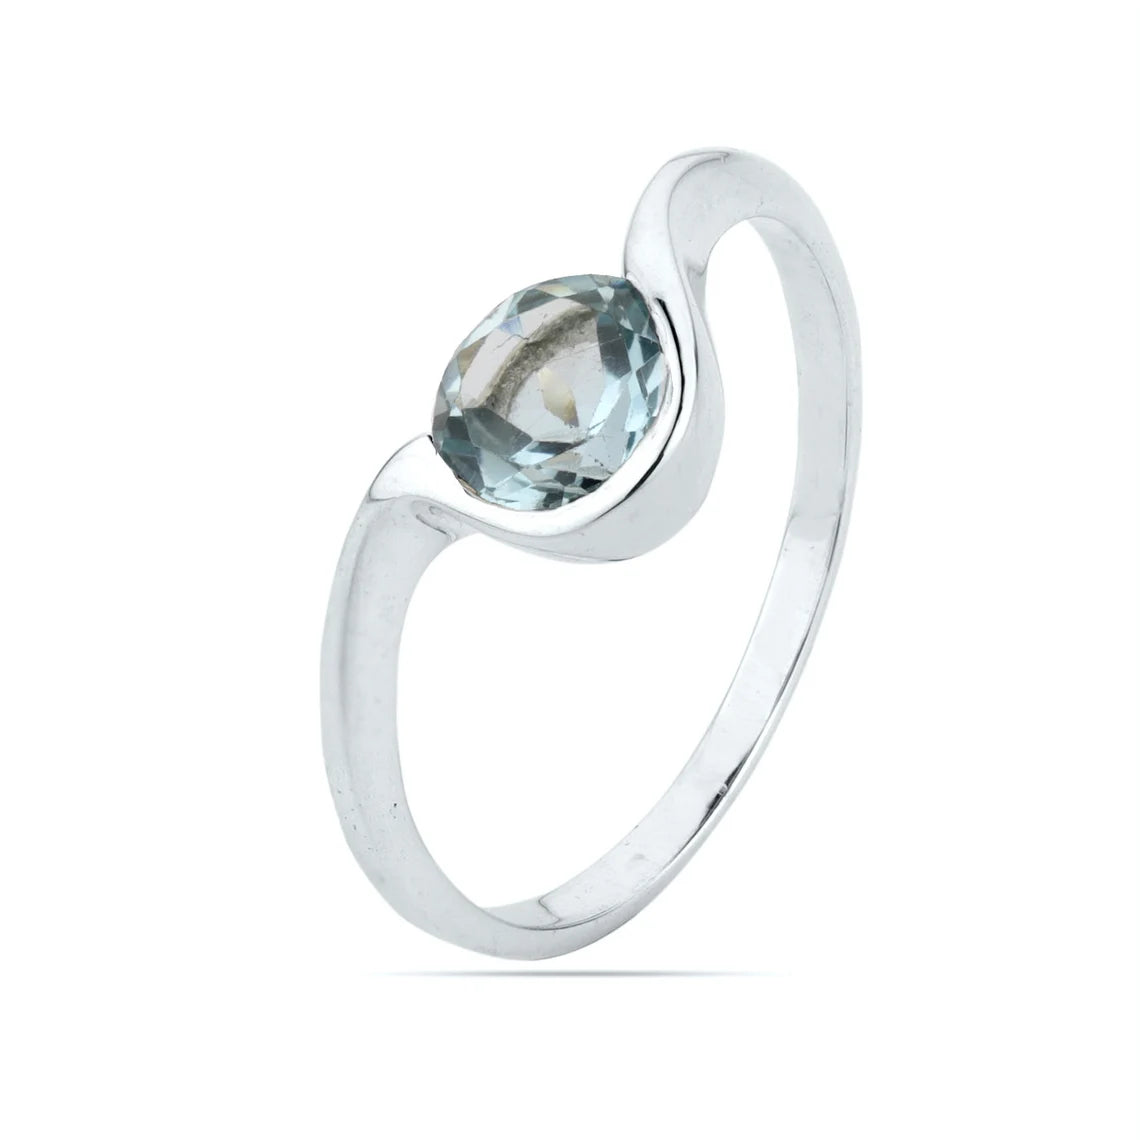 Round Swiss Topaz Ring - Blue Topaz Gemstone Ring - 925 Sterling Silver Blue Topaz Ring